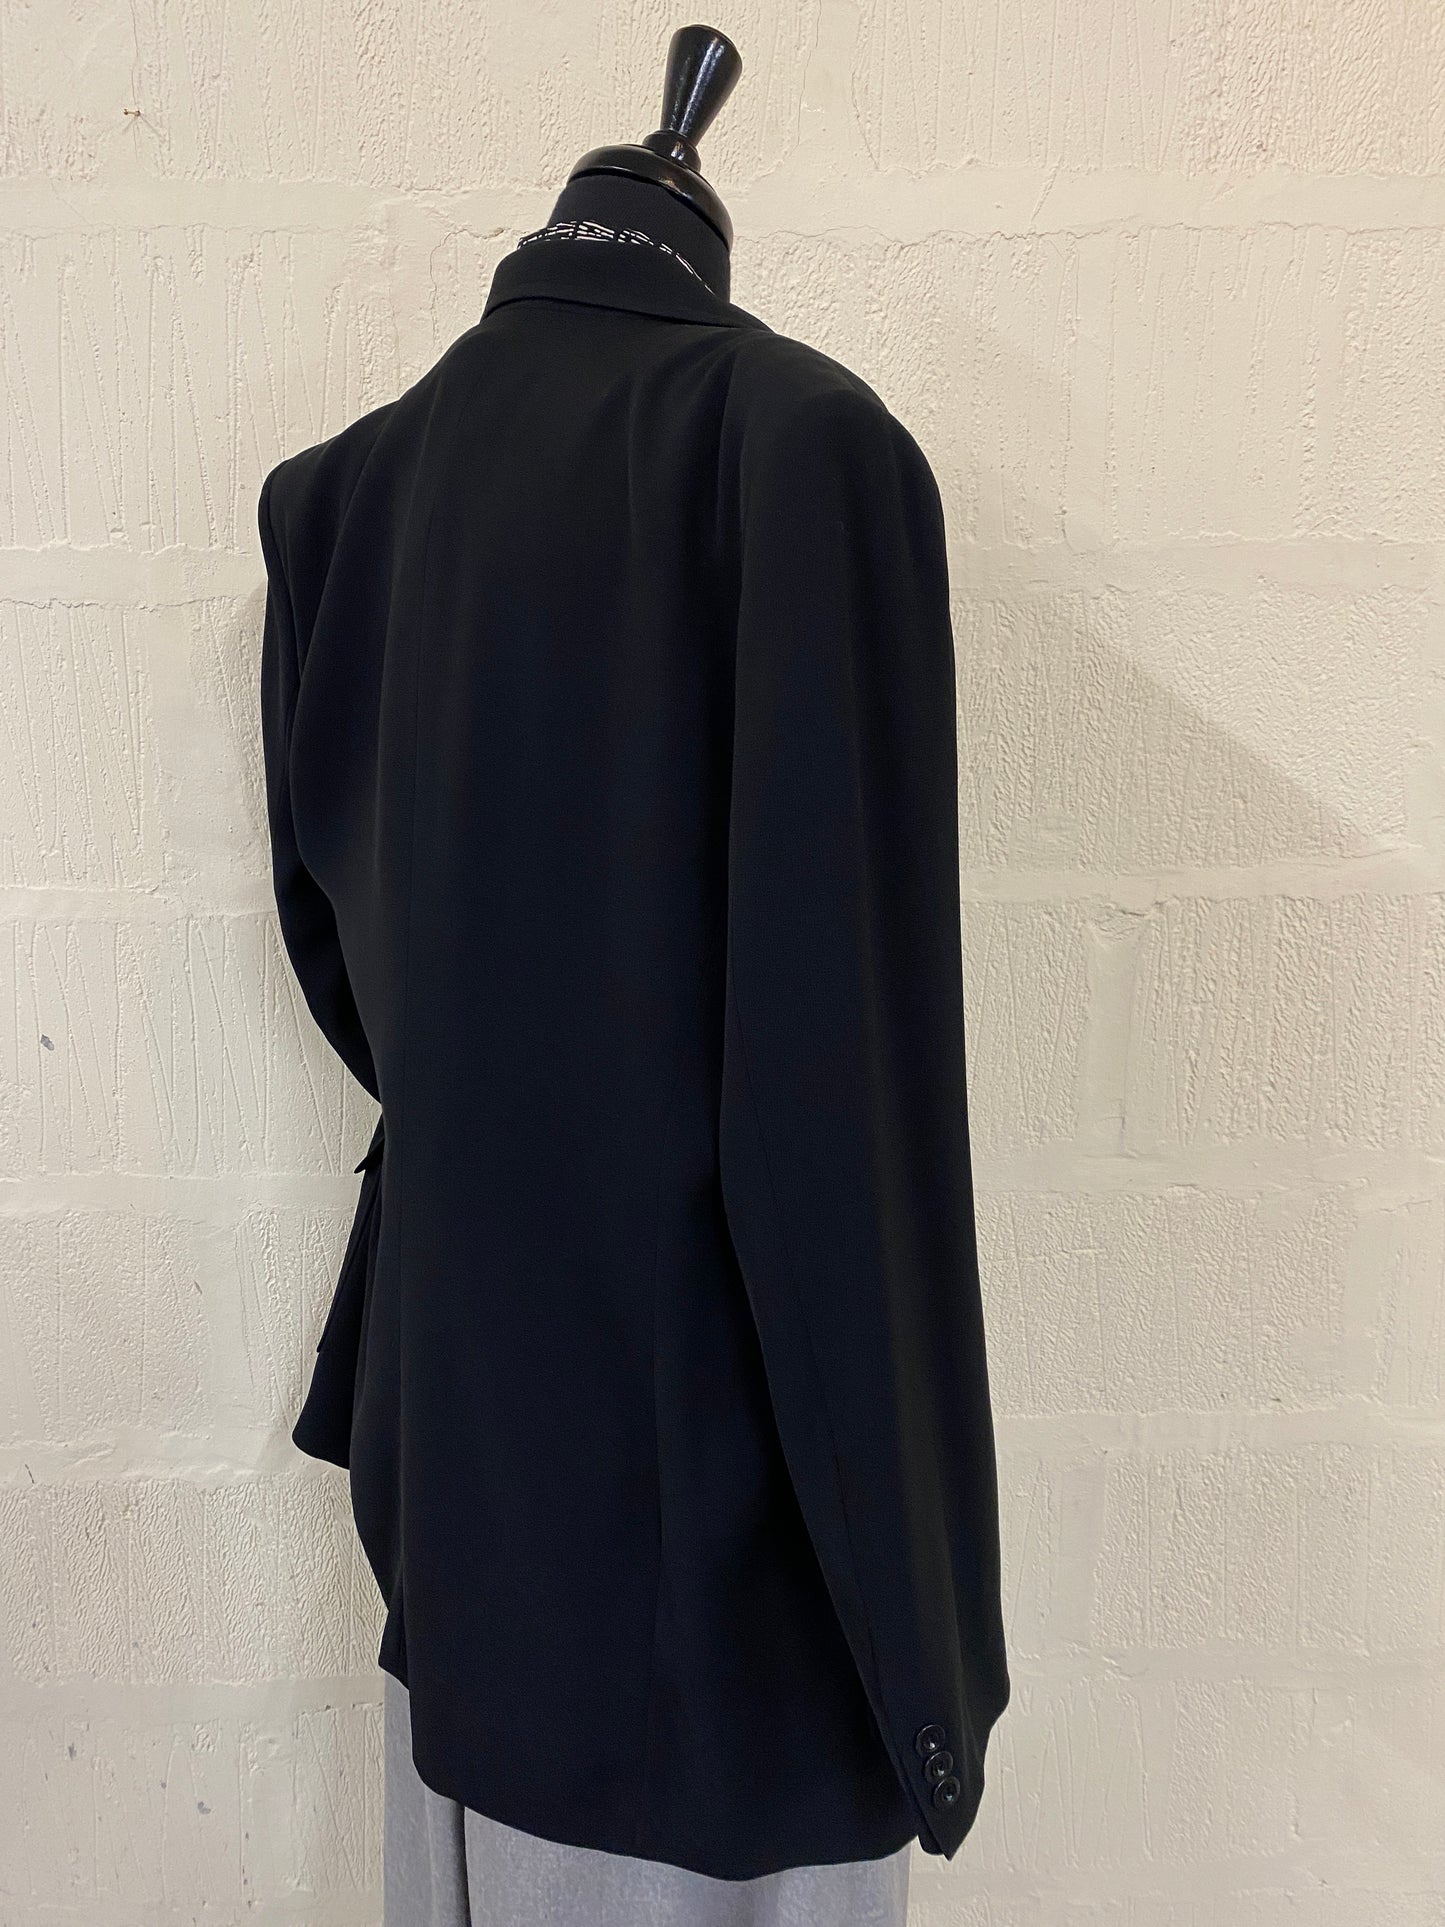 1980s Style Black Longline Jacket Size 16